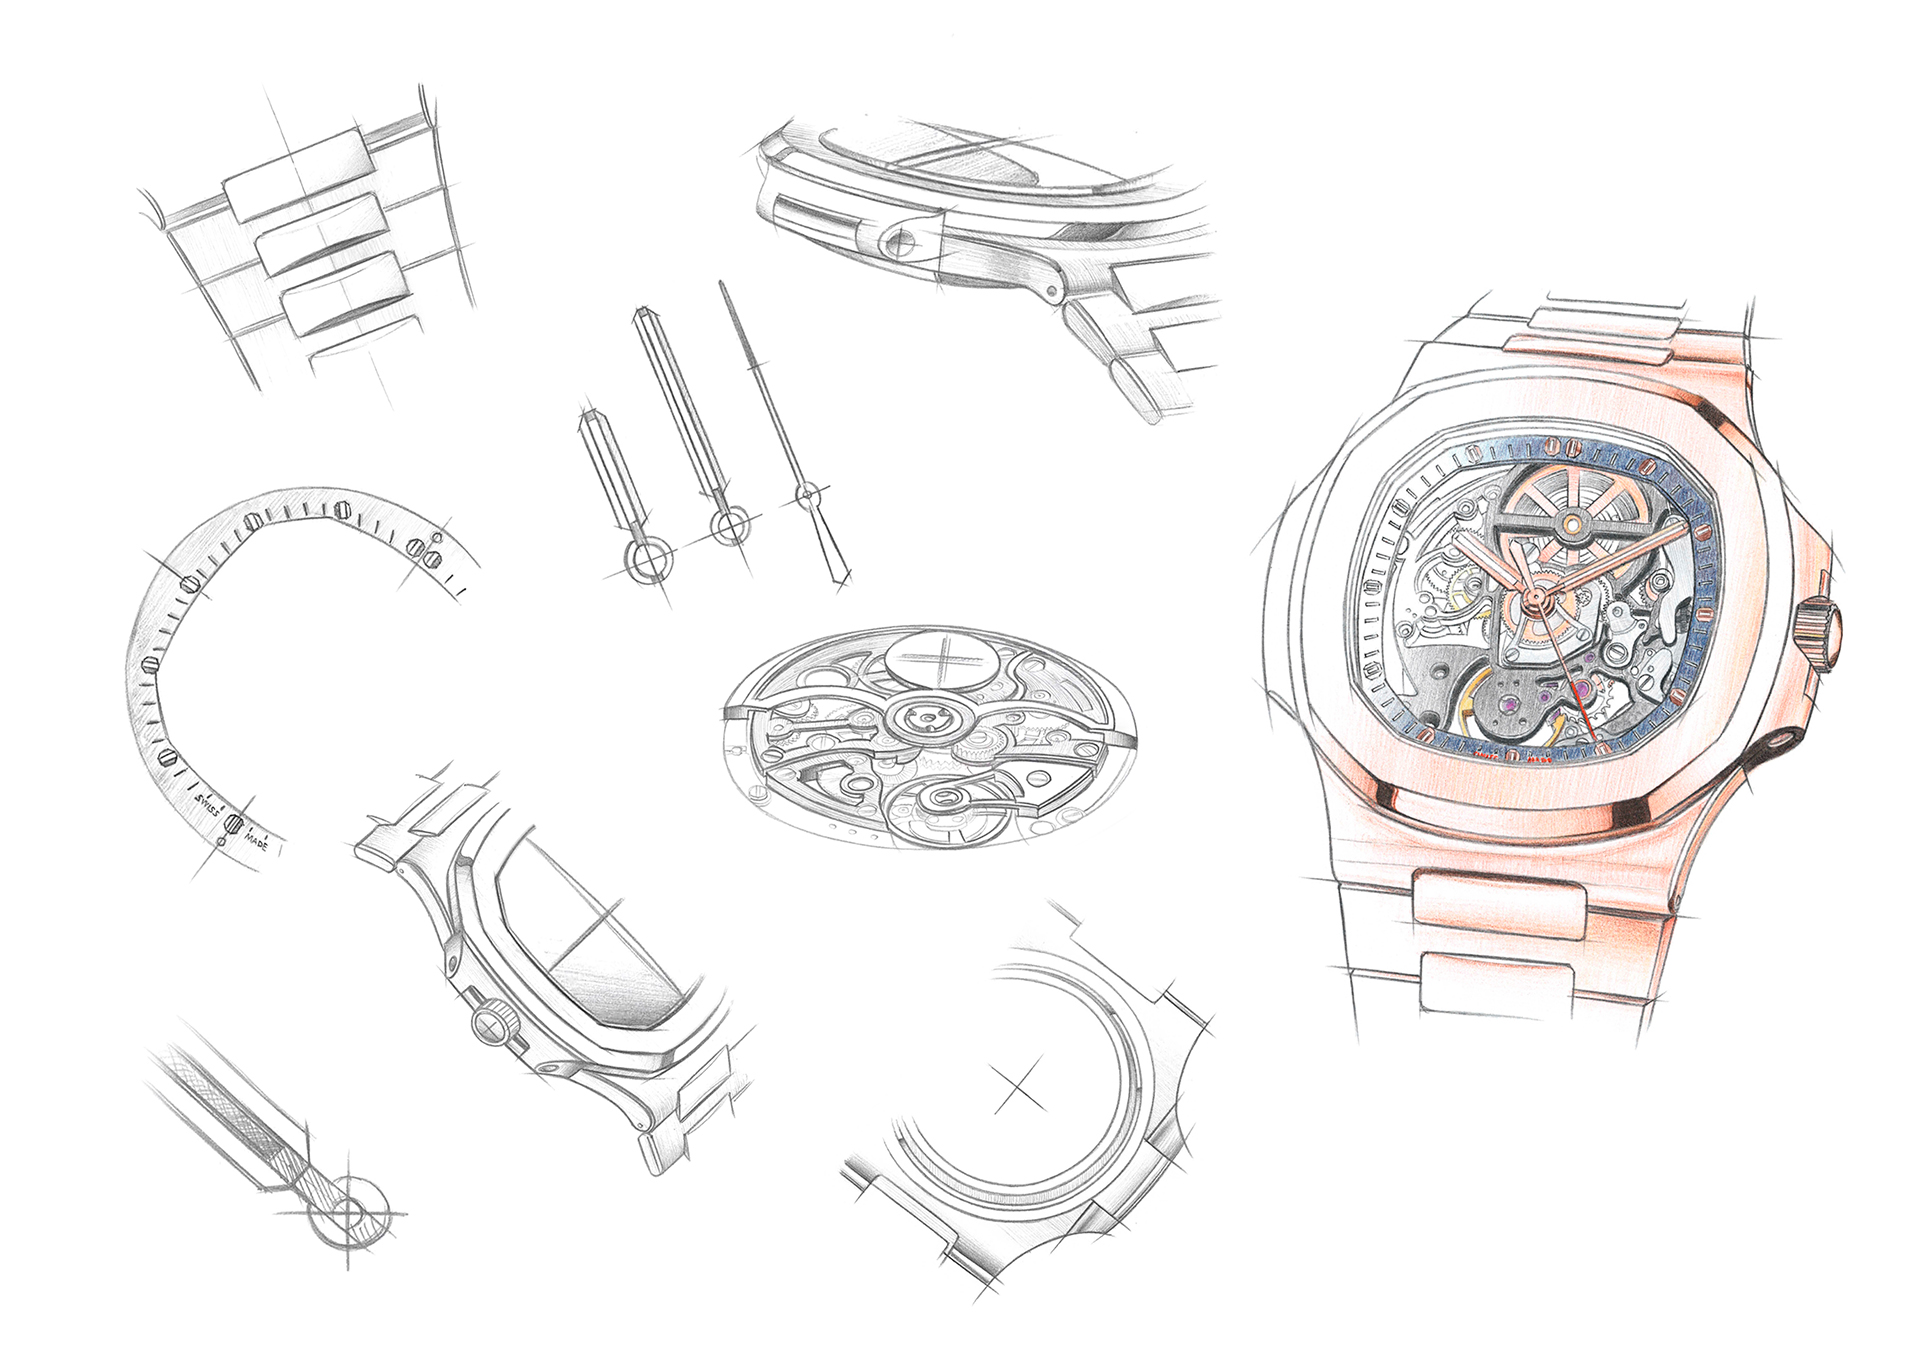 watch components sketchs